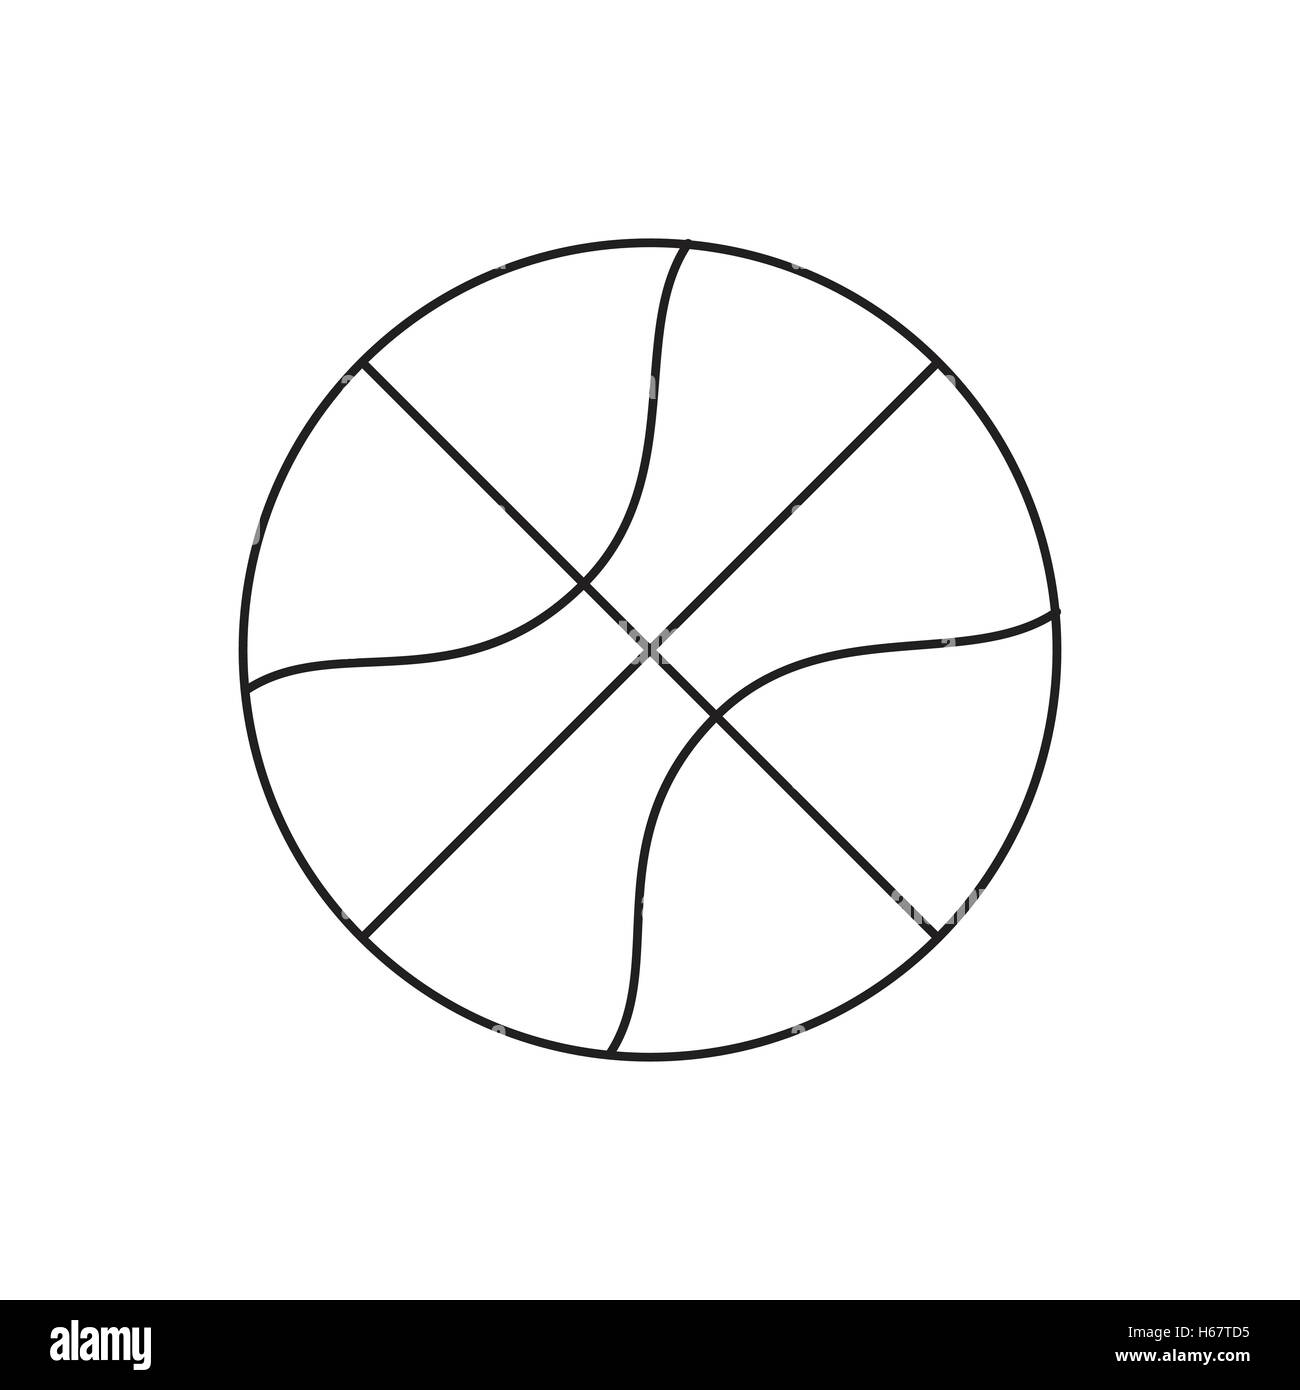 Basketball-Liniensymbol Stock Vektor